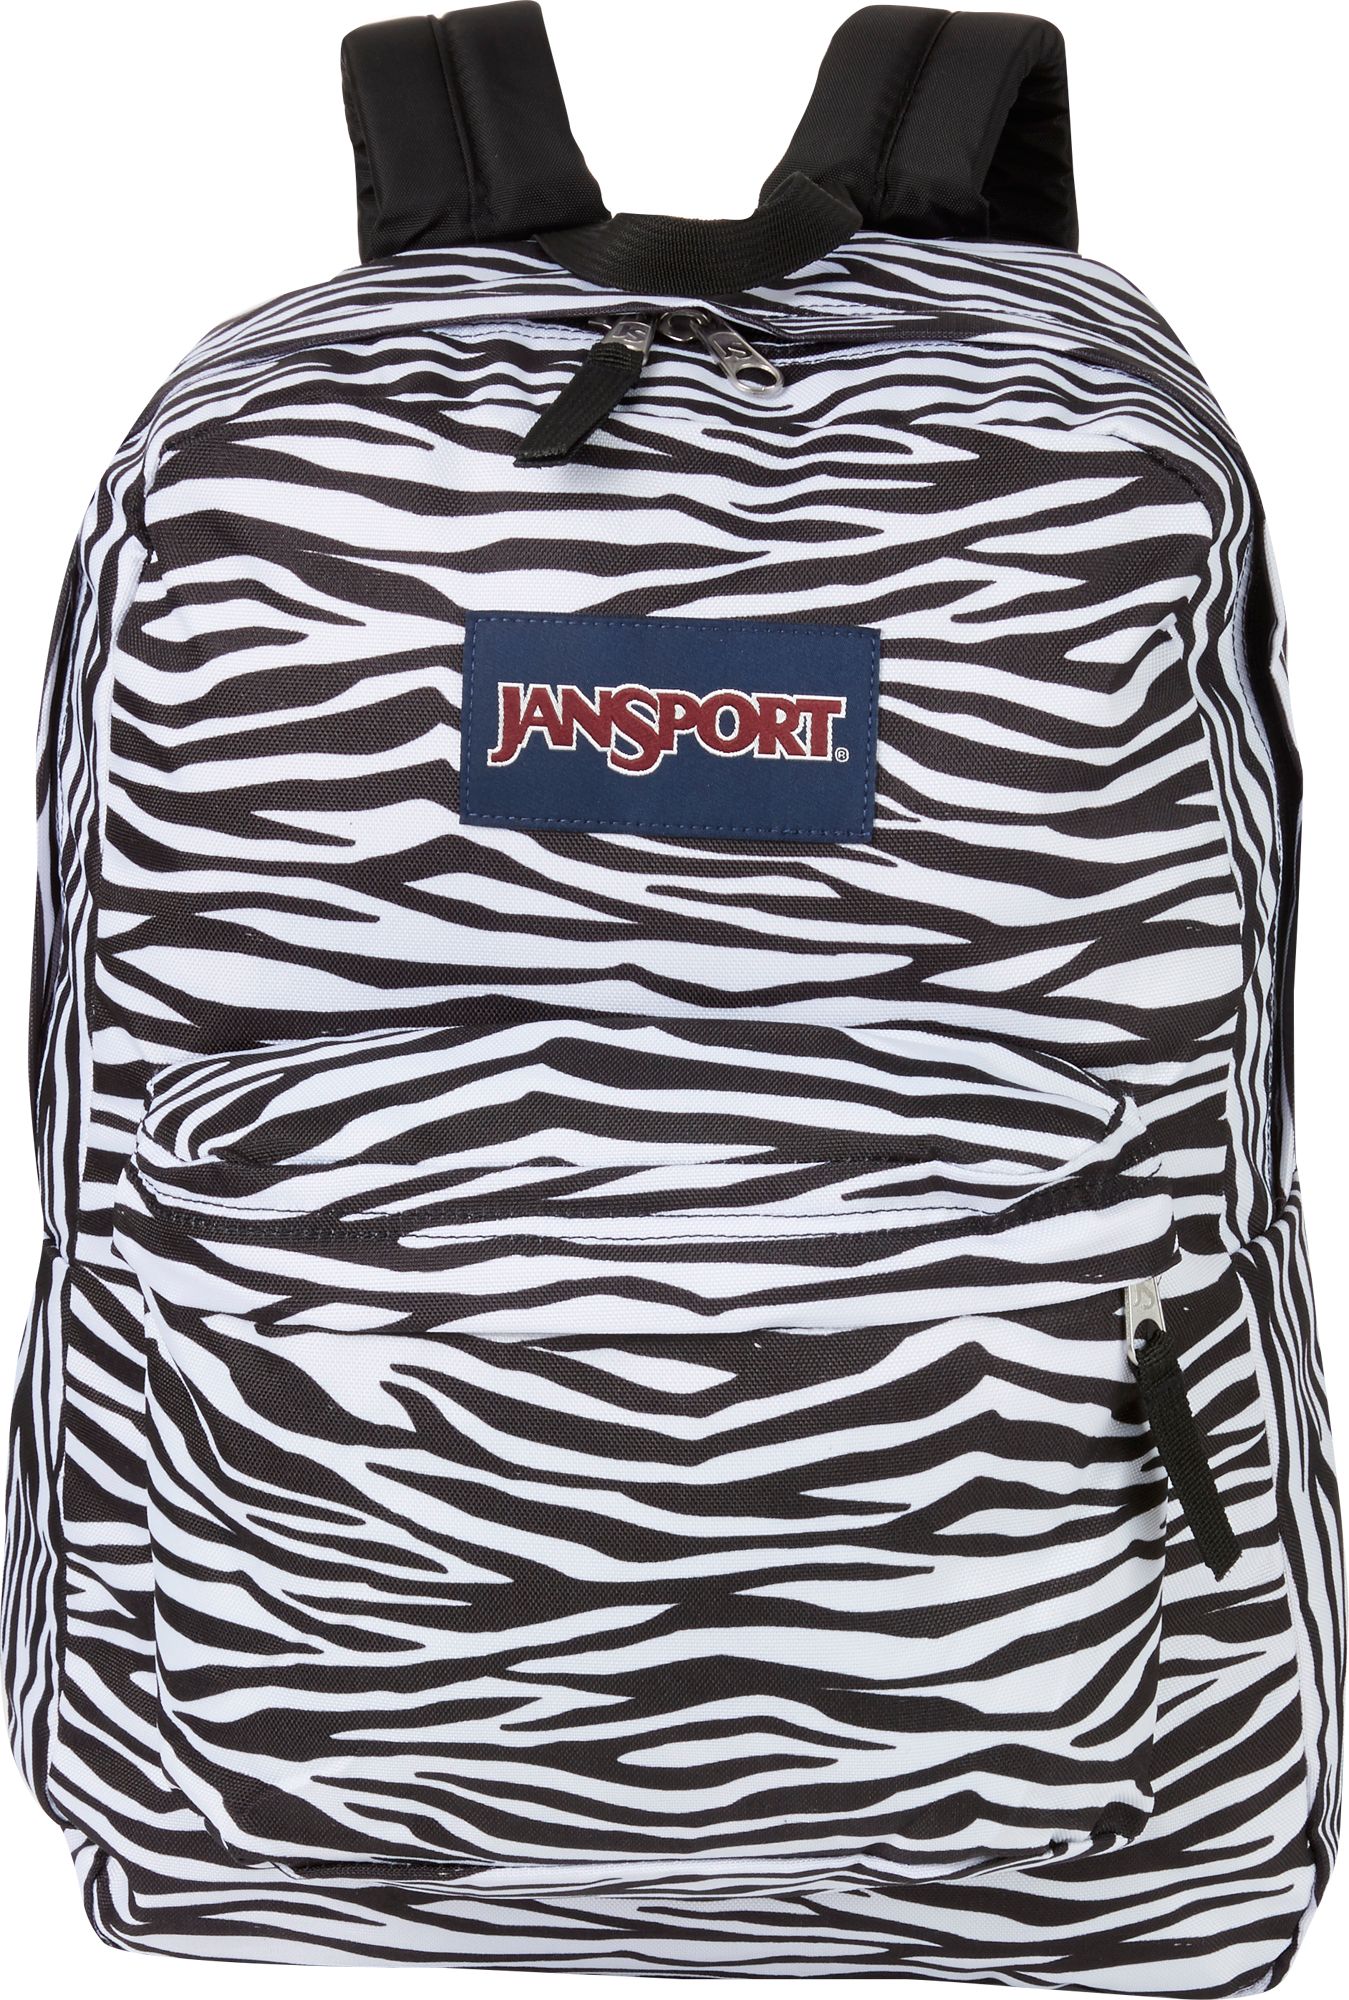 jansport zebra backpack